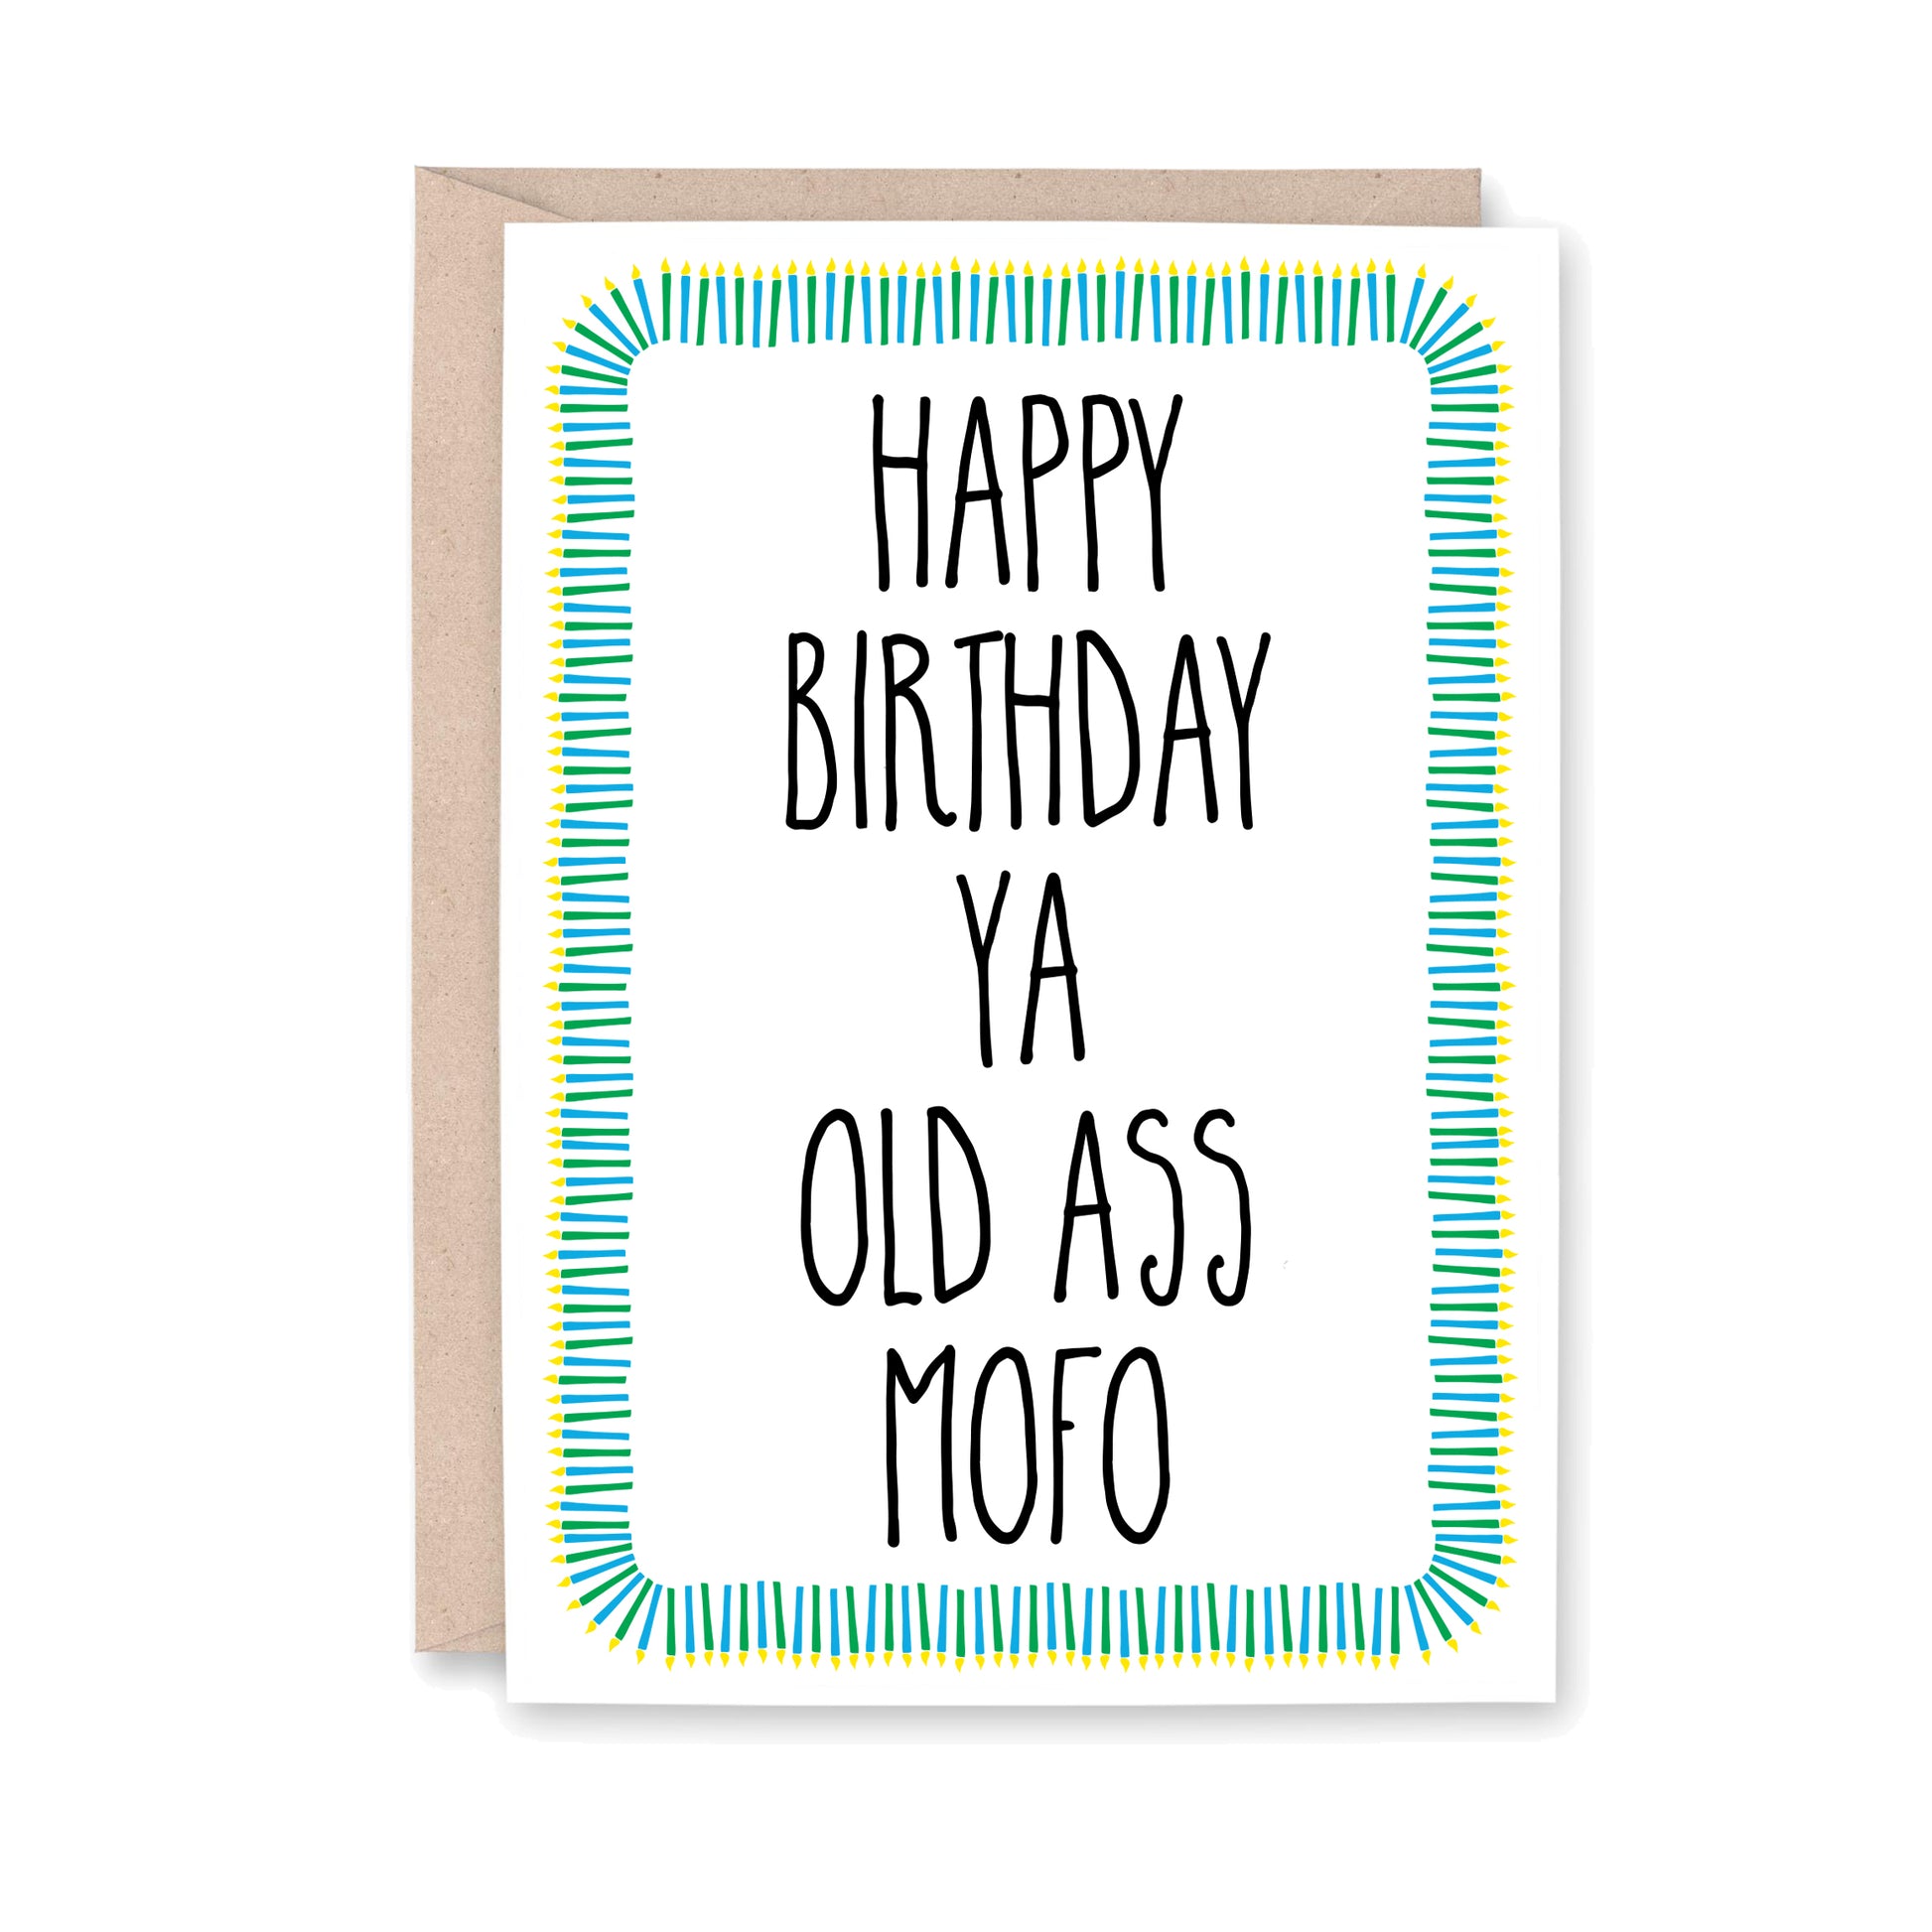 Happy Birthday Ya Old Ass Mofo